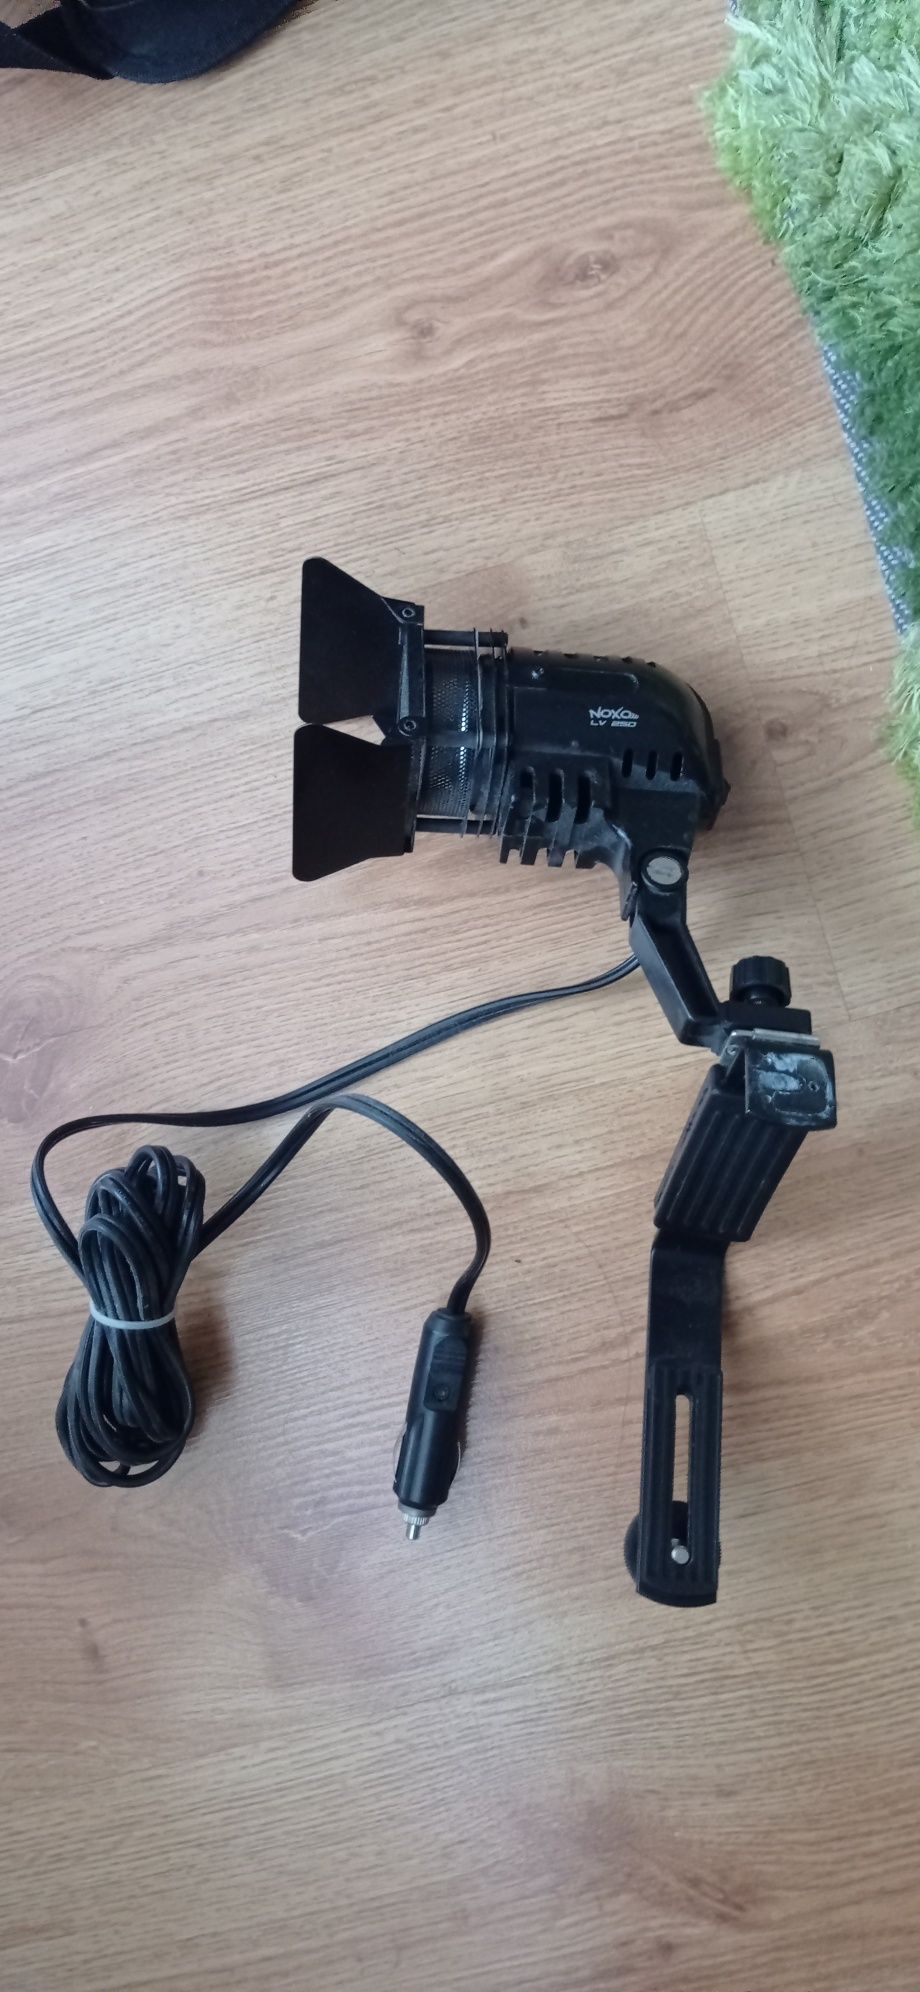 Lampa  do kamery aparatu noxo  LV 250. 12v